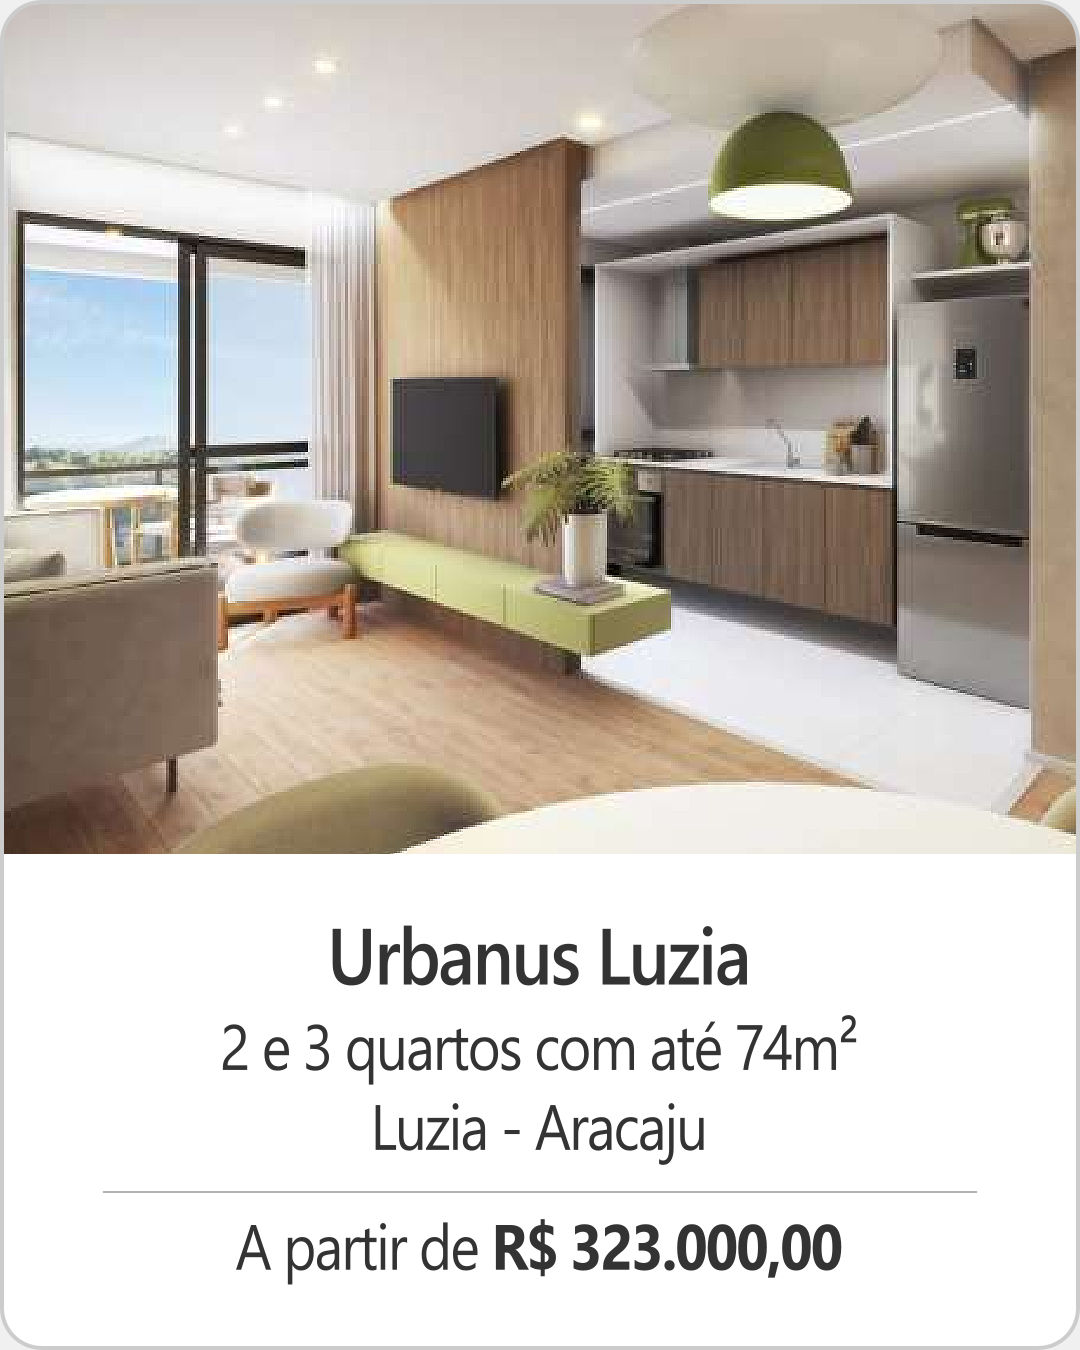 #urbanusluzia